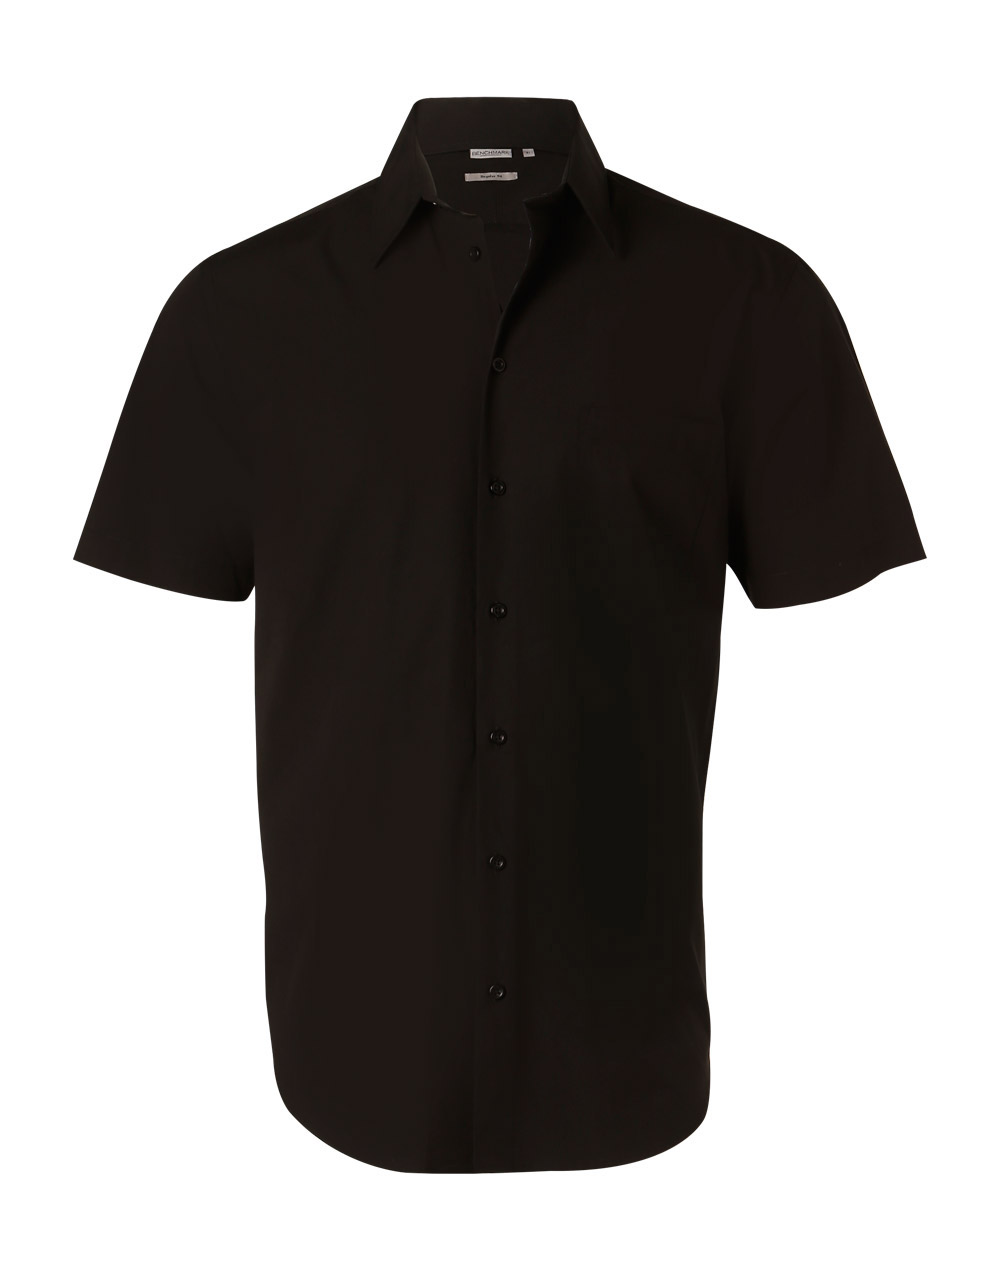 M7020S/M7020L Men’s Cotton/Poly Stretch Short Sleeve Shirt